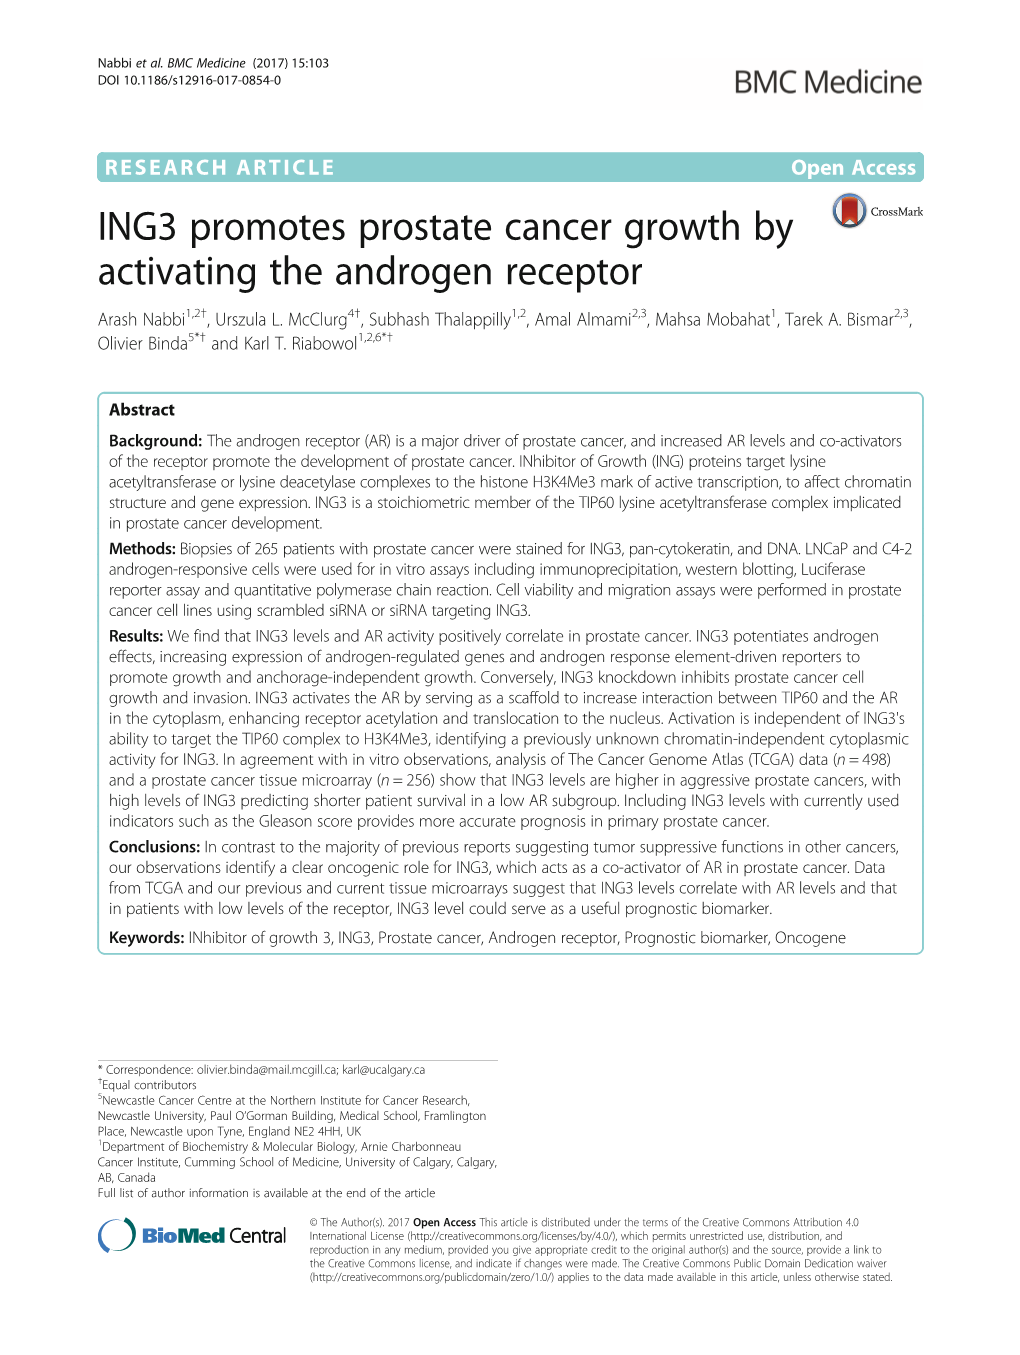 ING3 Promotes Prostate Cancer Growth by Activating the Androgen Receptor Arash Nabbi1,2†, Urszula L